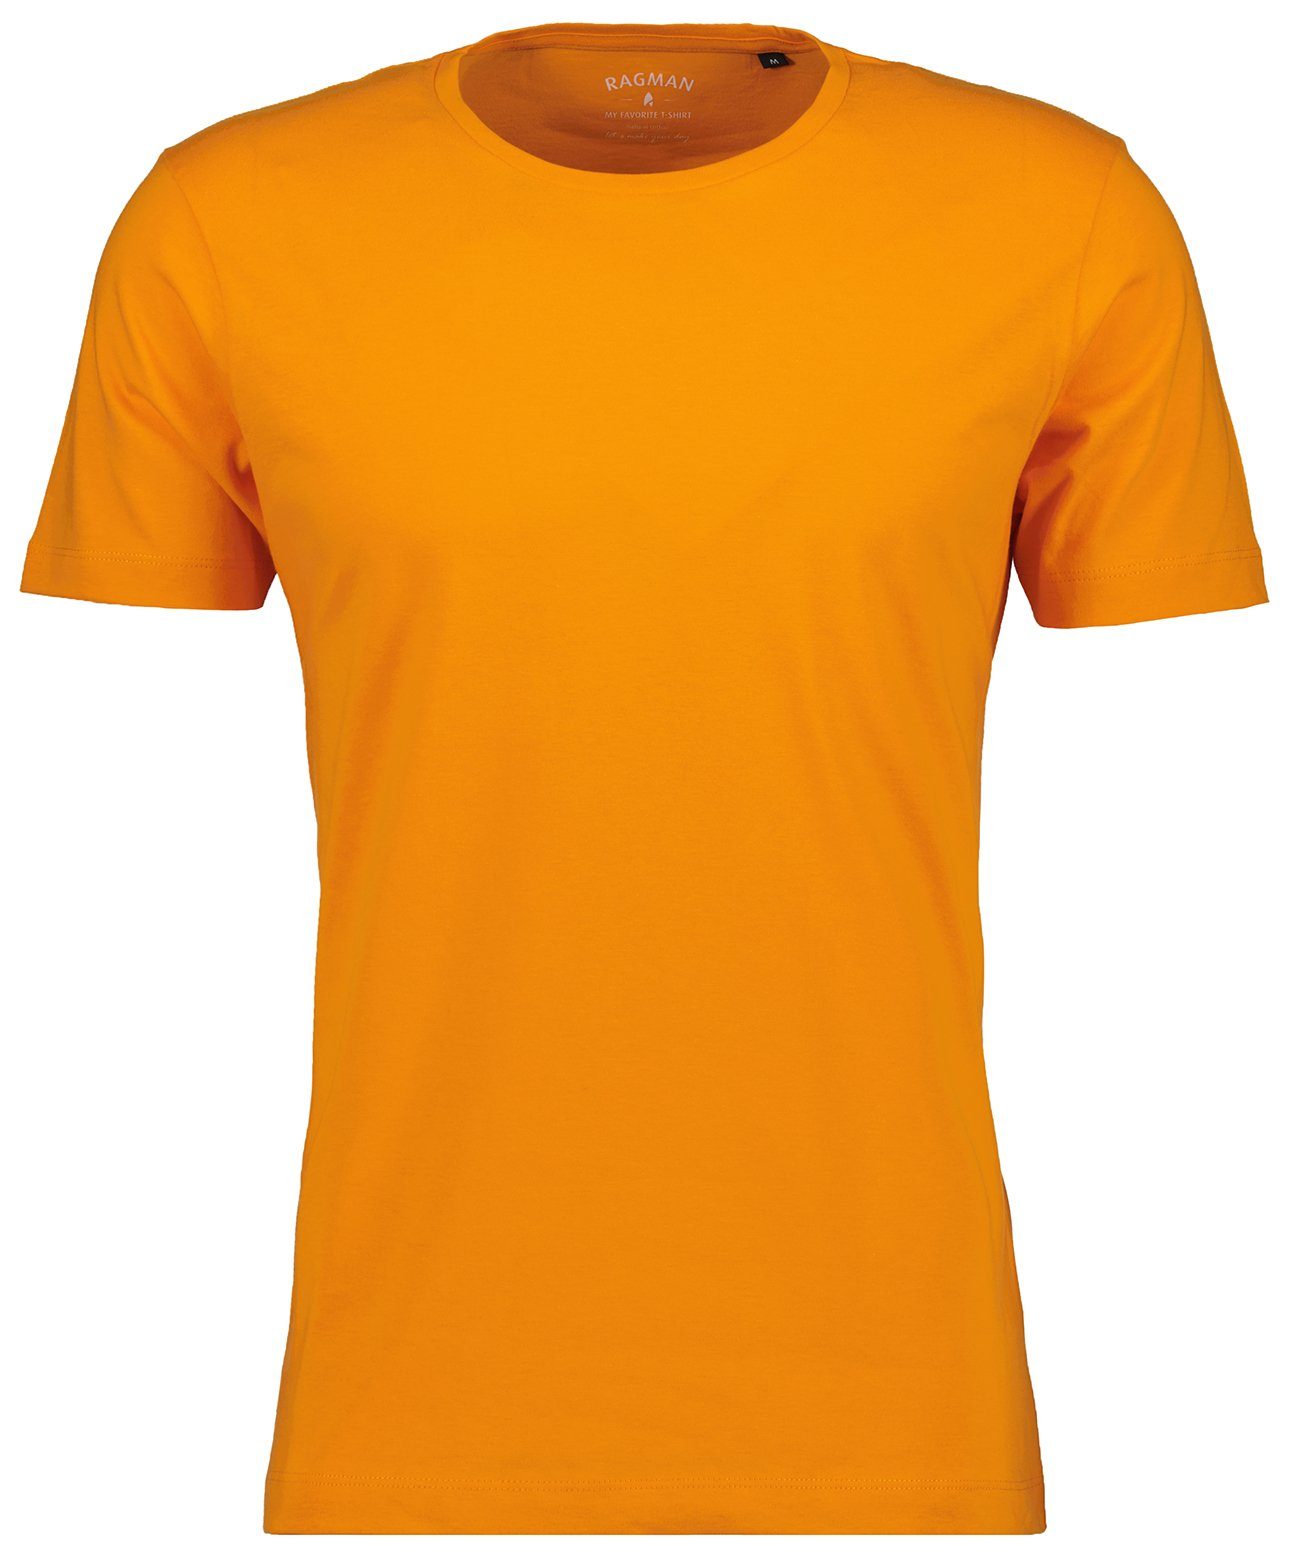 RAGMAN T-Shirt Mandarin-562